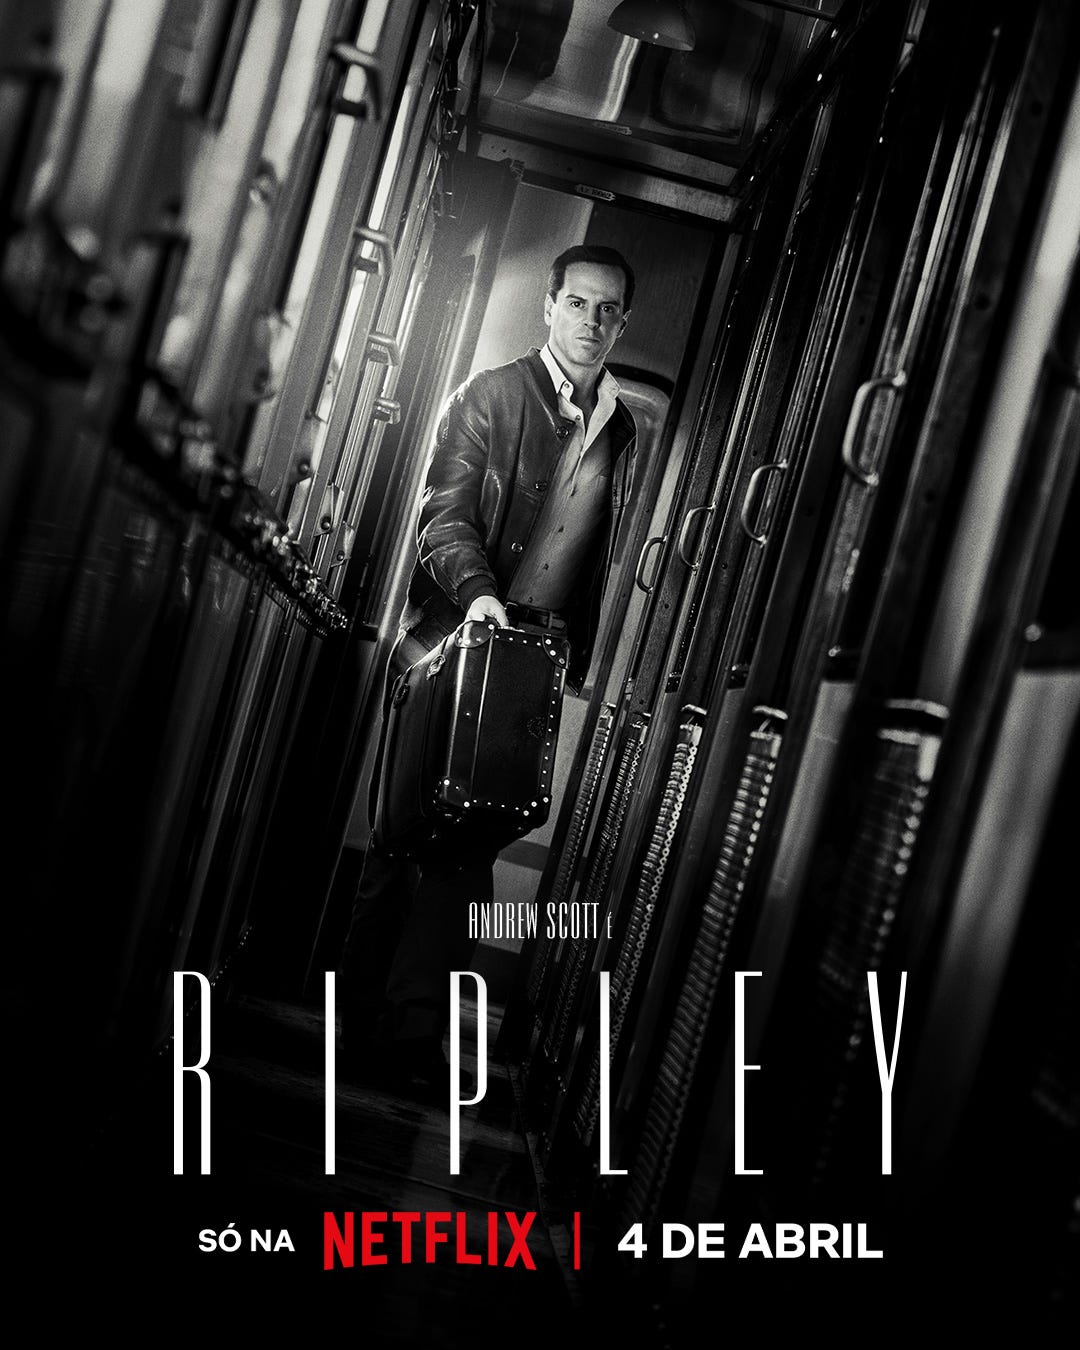 Portal Netflix BR | Fan Account on X: "Pôster de 'Ripley', nova minissérie  estrelada por Andrew Scott. Estreia em 4 de abril na Netflix.  https://t.co/aQRDGCZ5bG" / X